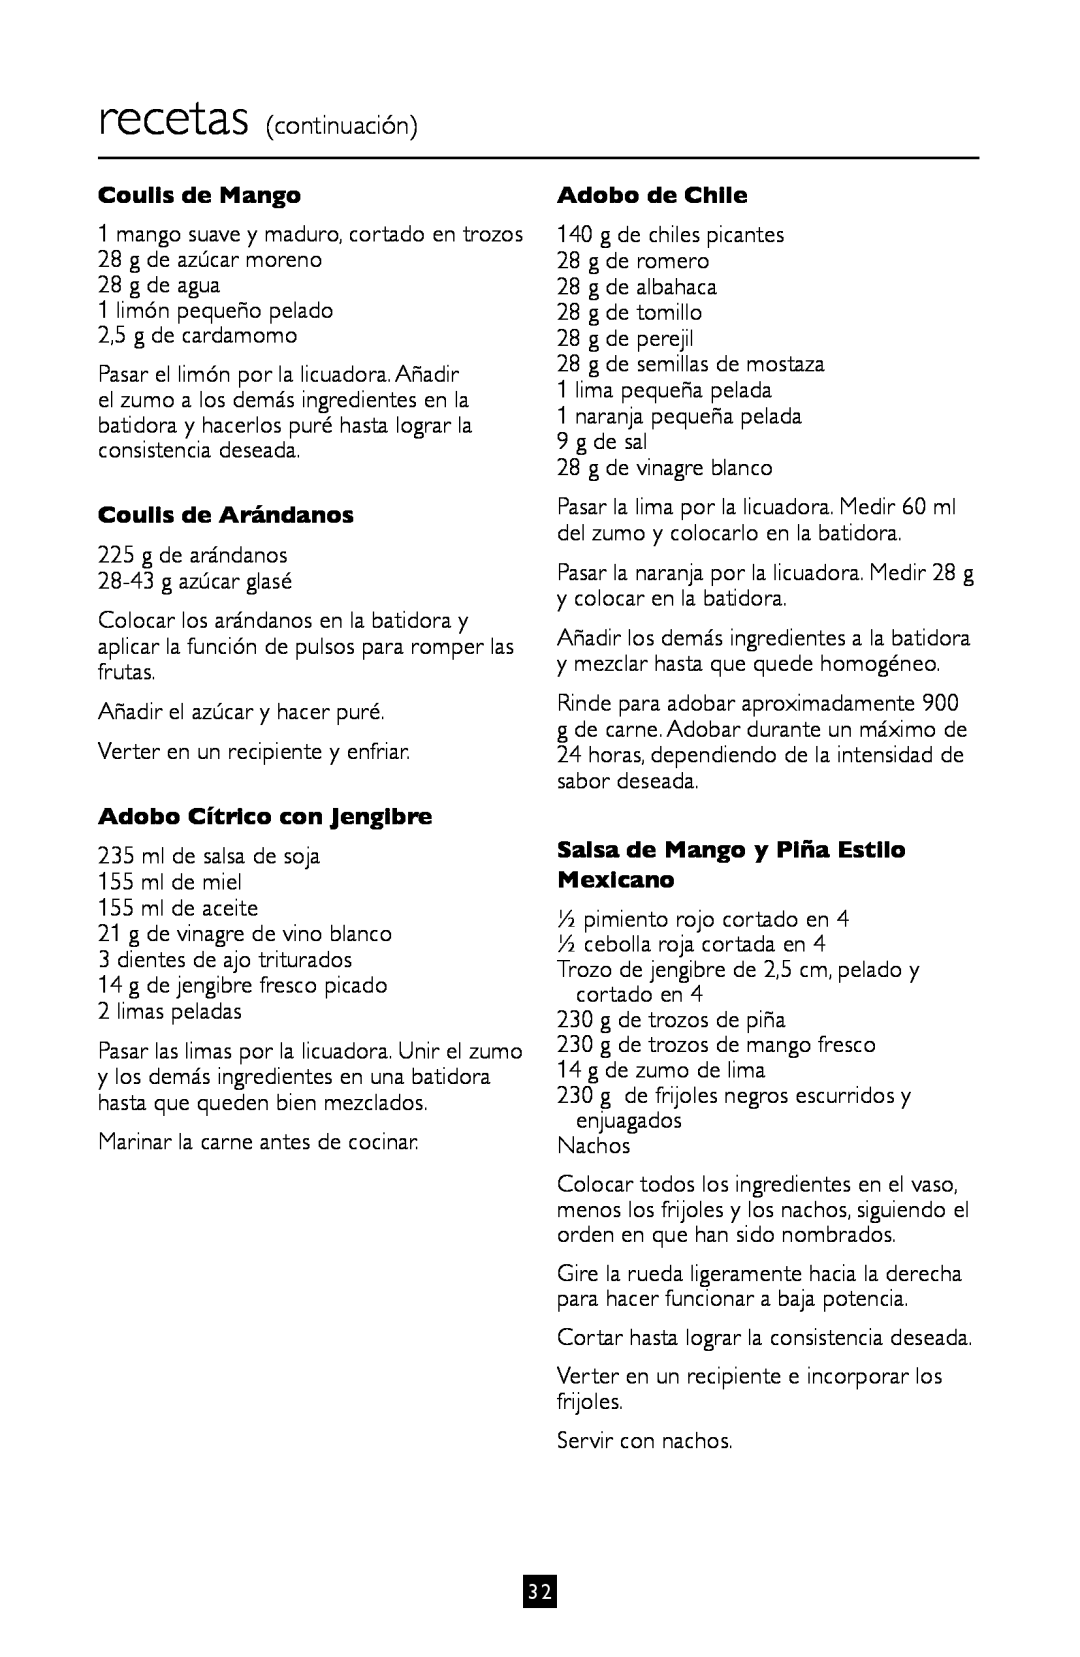 Villaware BLVLLAZ05H recetas continuación, Coulis de Mango, Coulis de Arándanos, Adobo Cítrico con Jengibre 